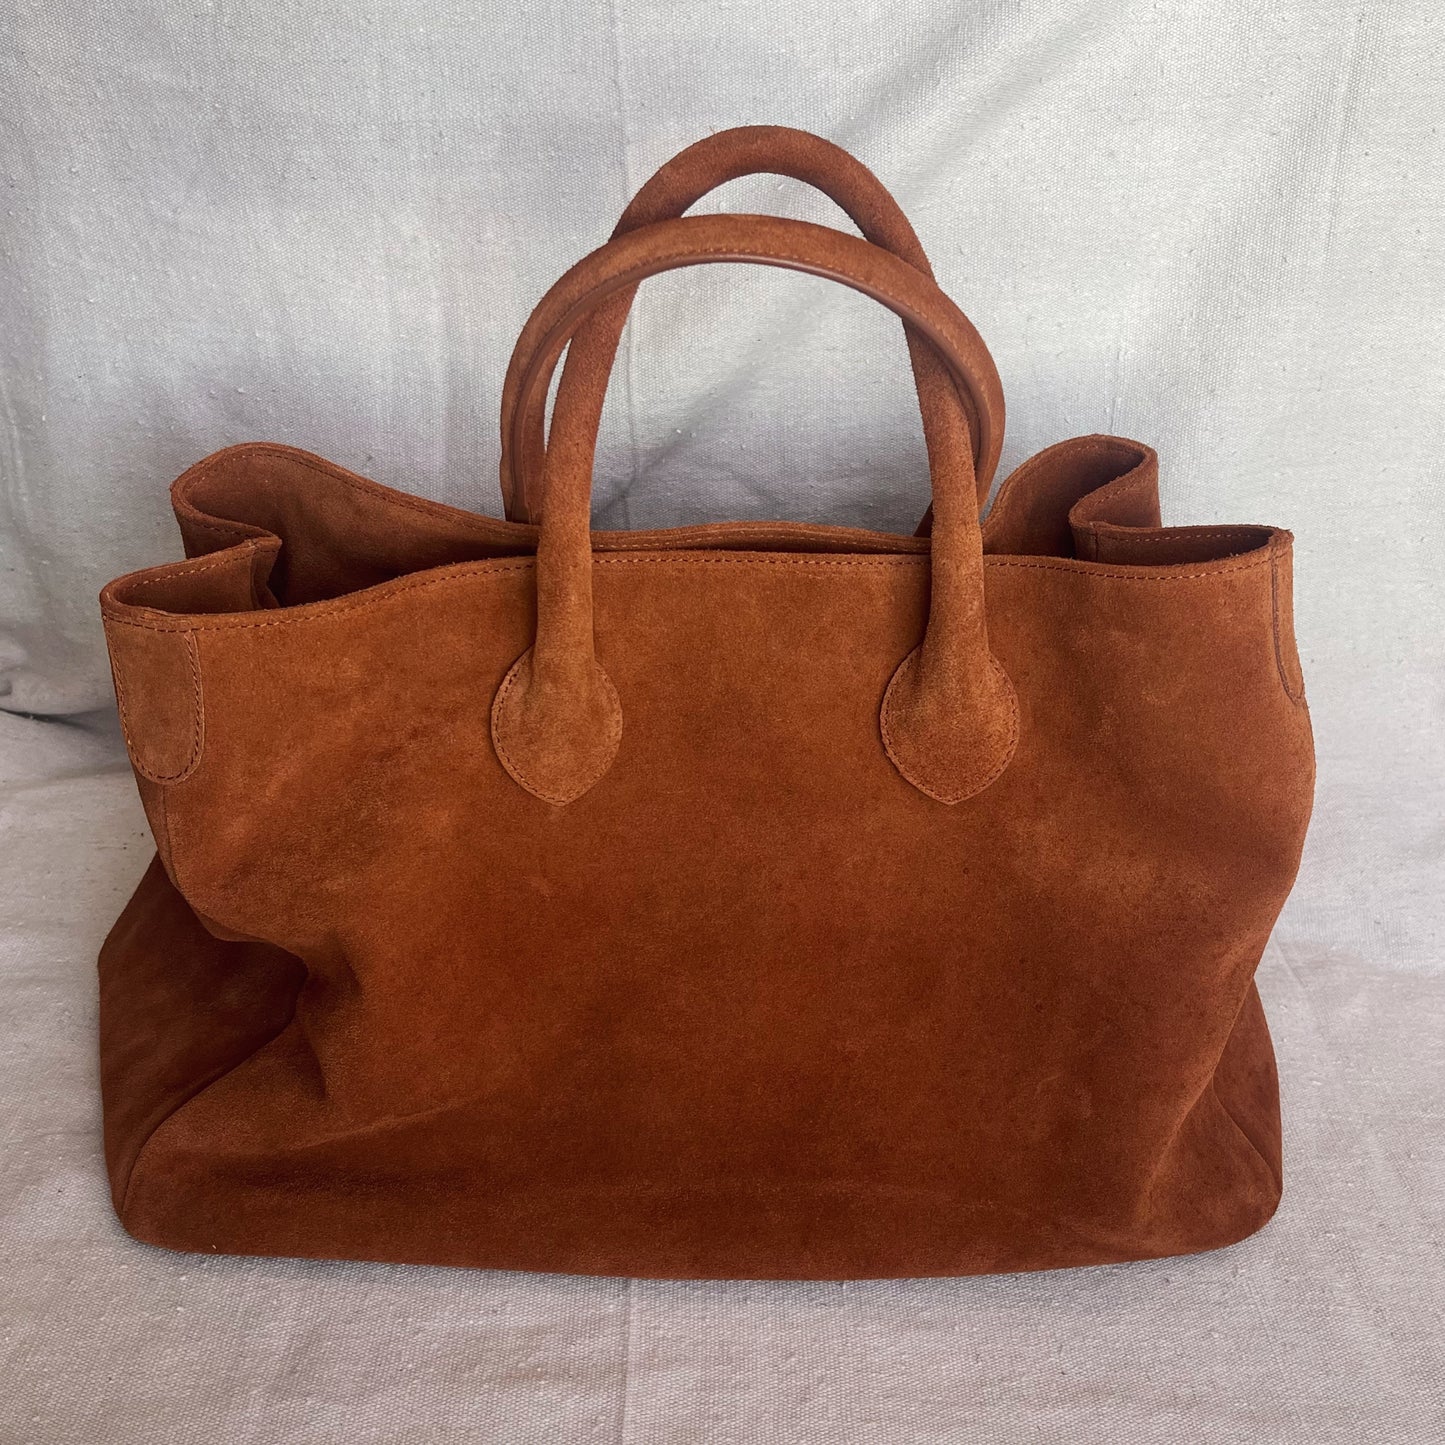 leather tote purse